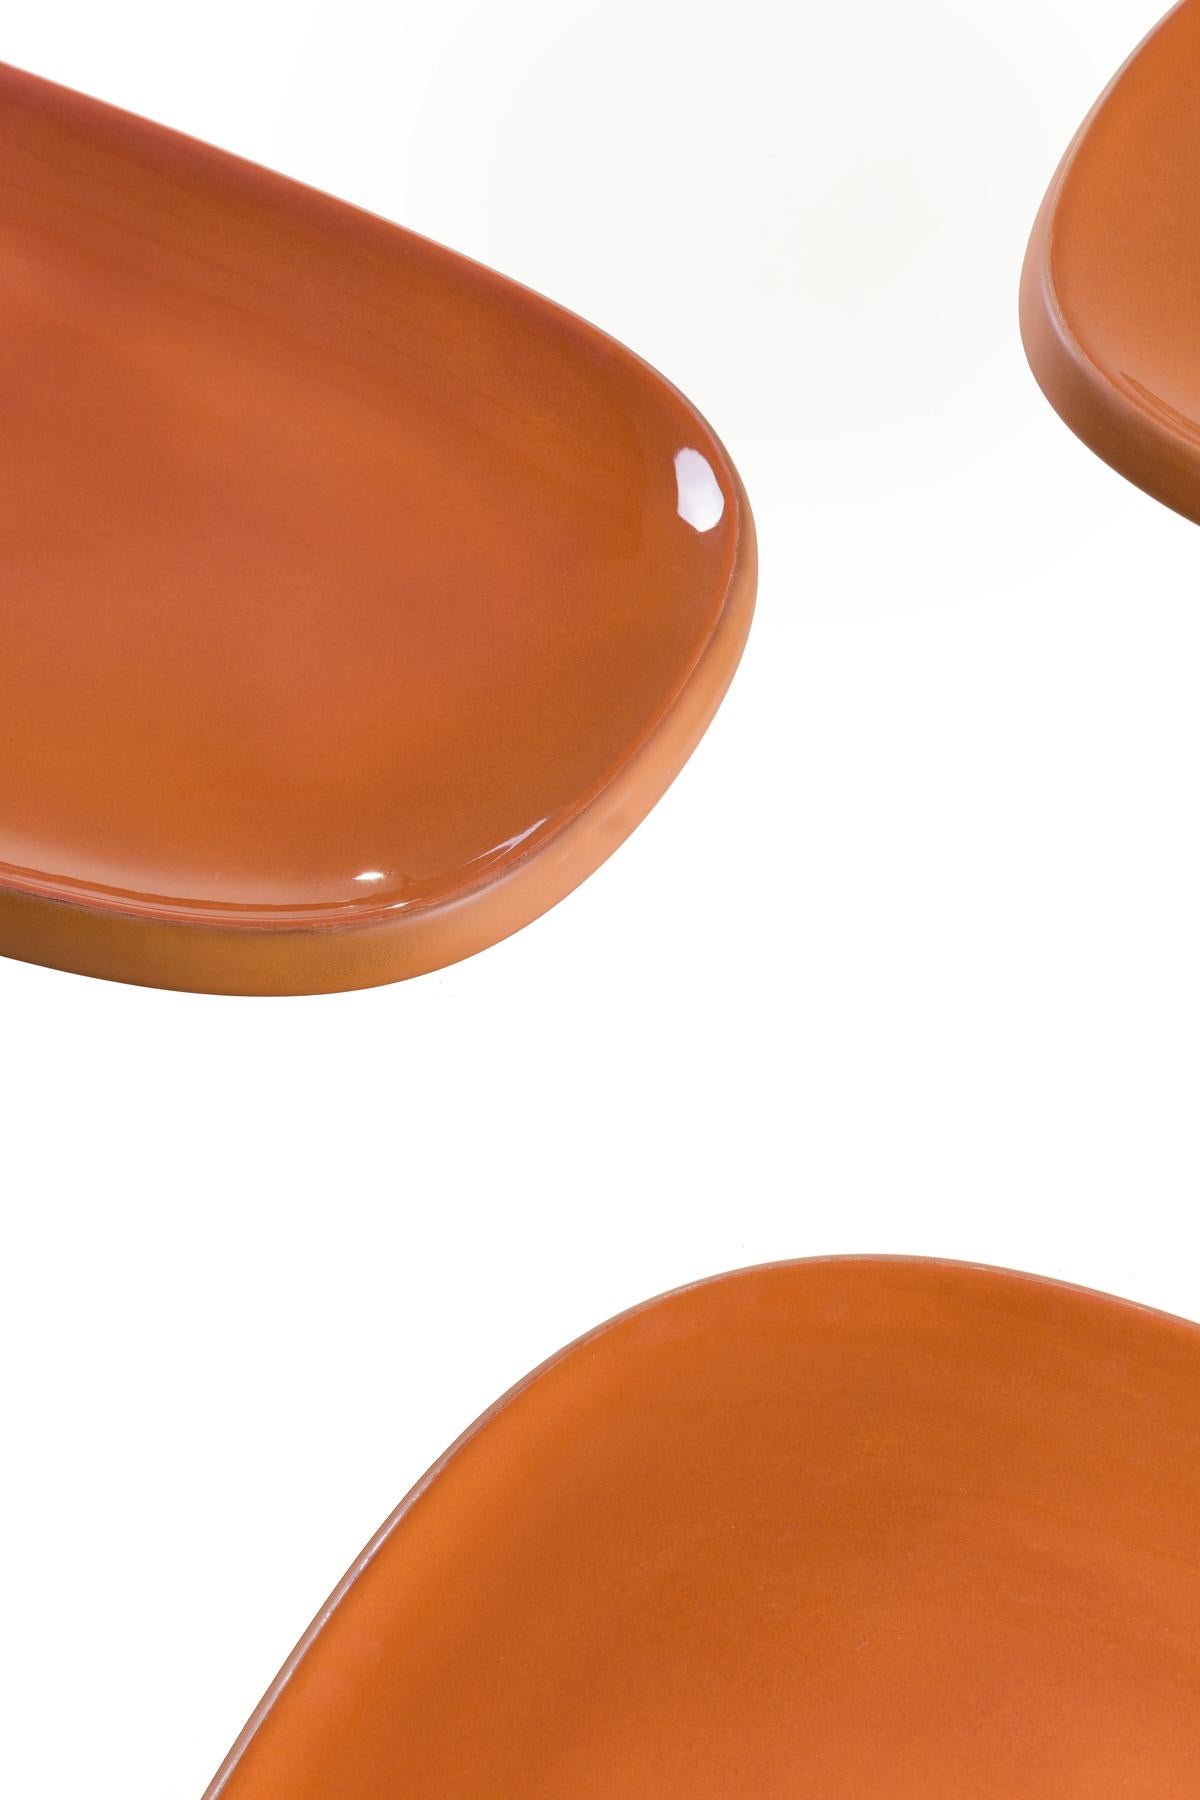 Dutch Moooi Obon Rectangular Low Ceramic Table in Grey Finish by Simone Bonanni For Sale